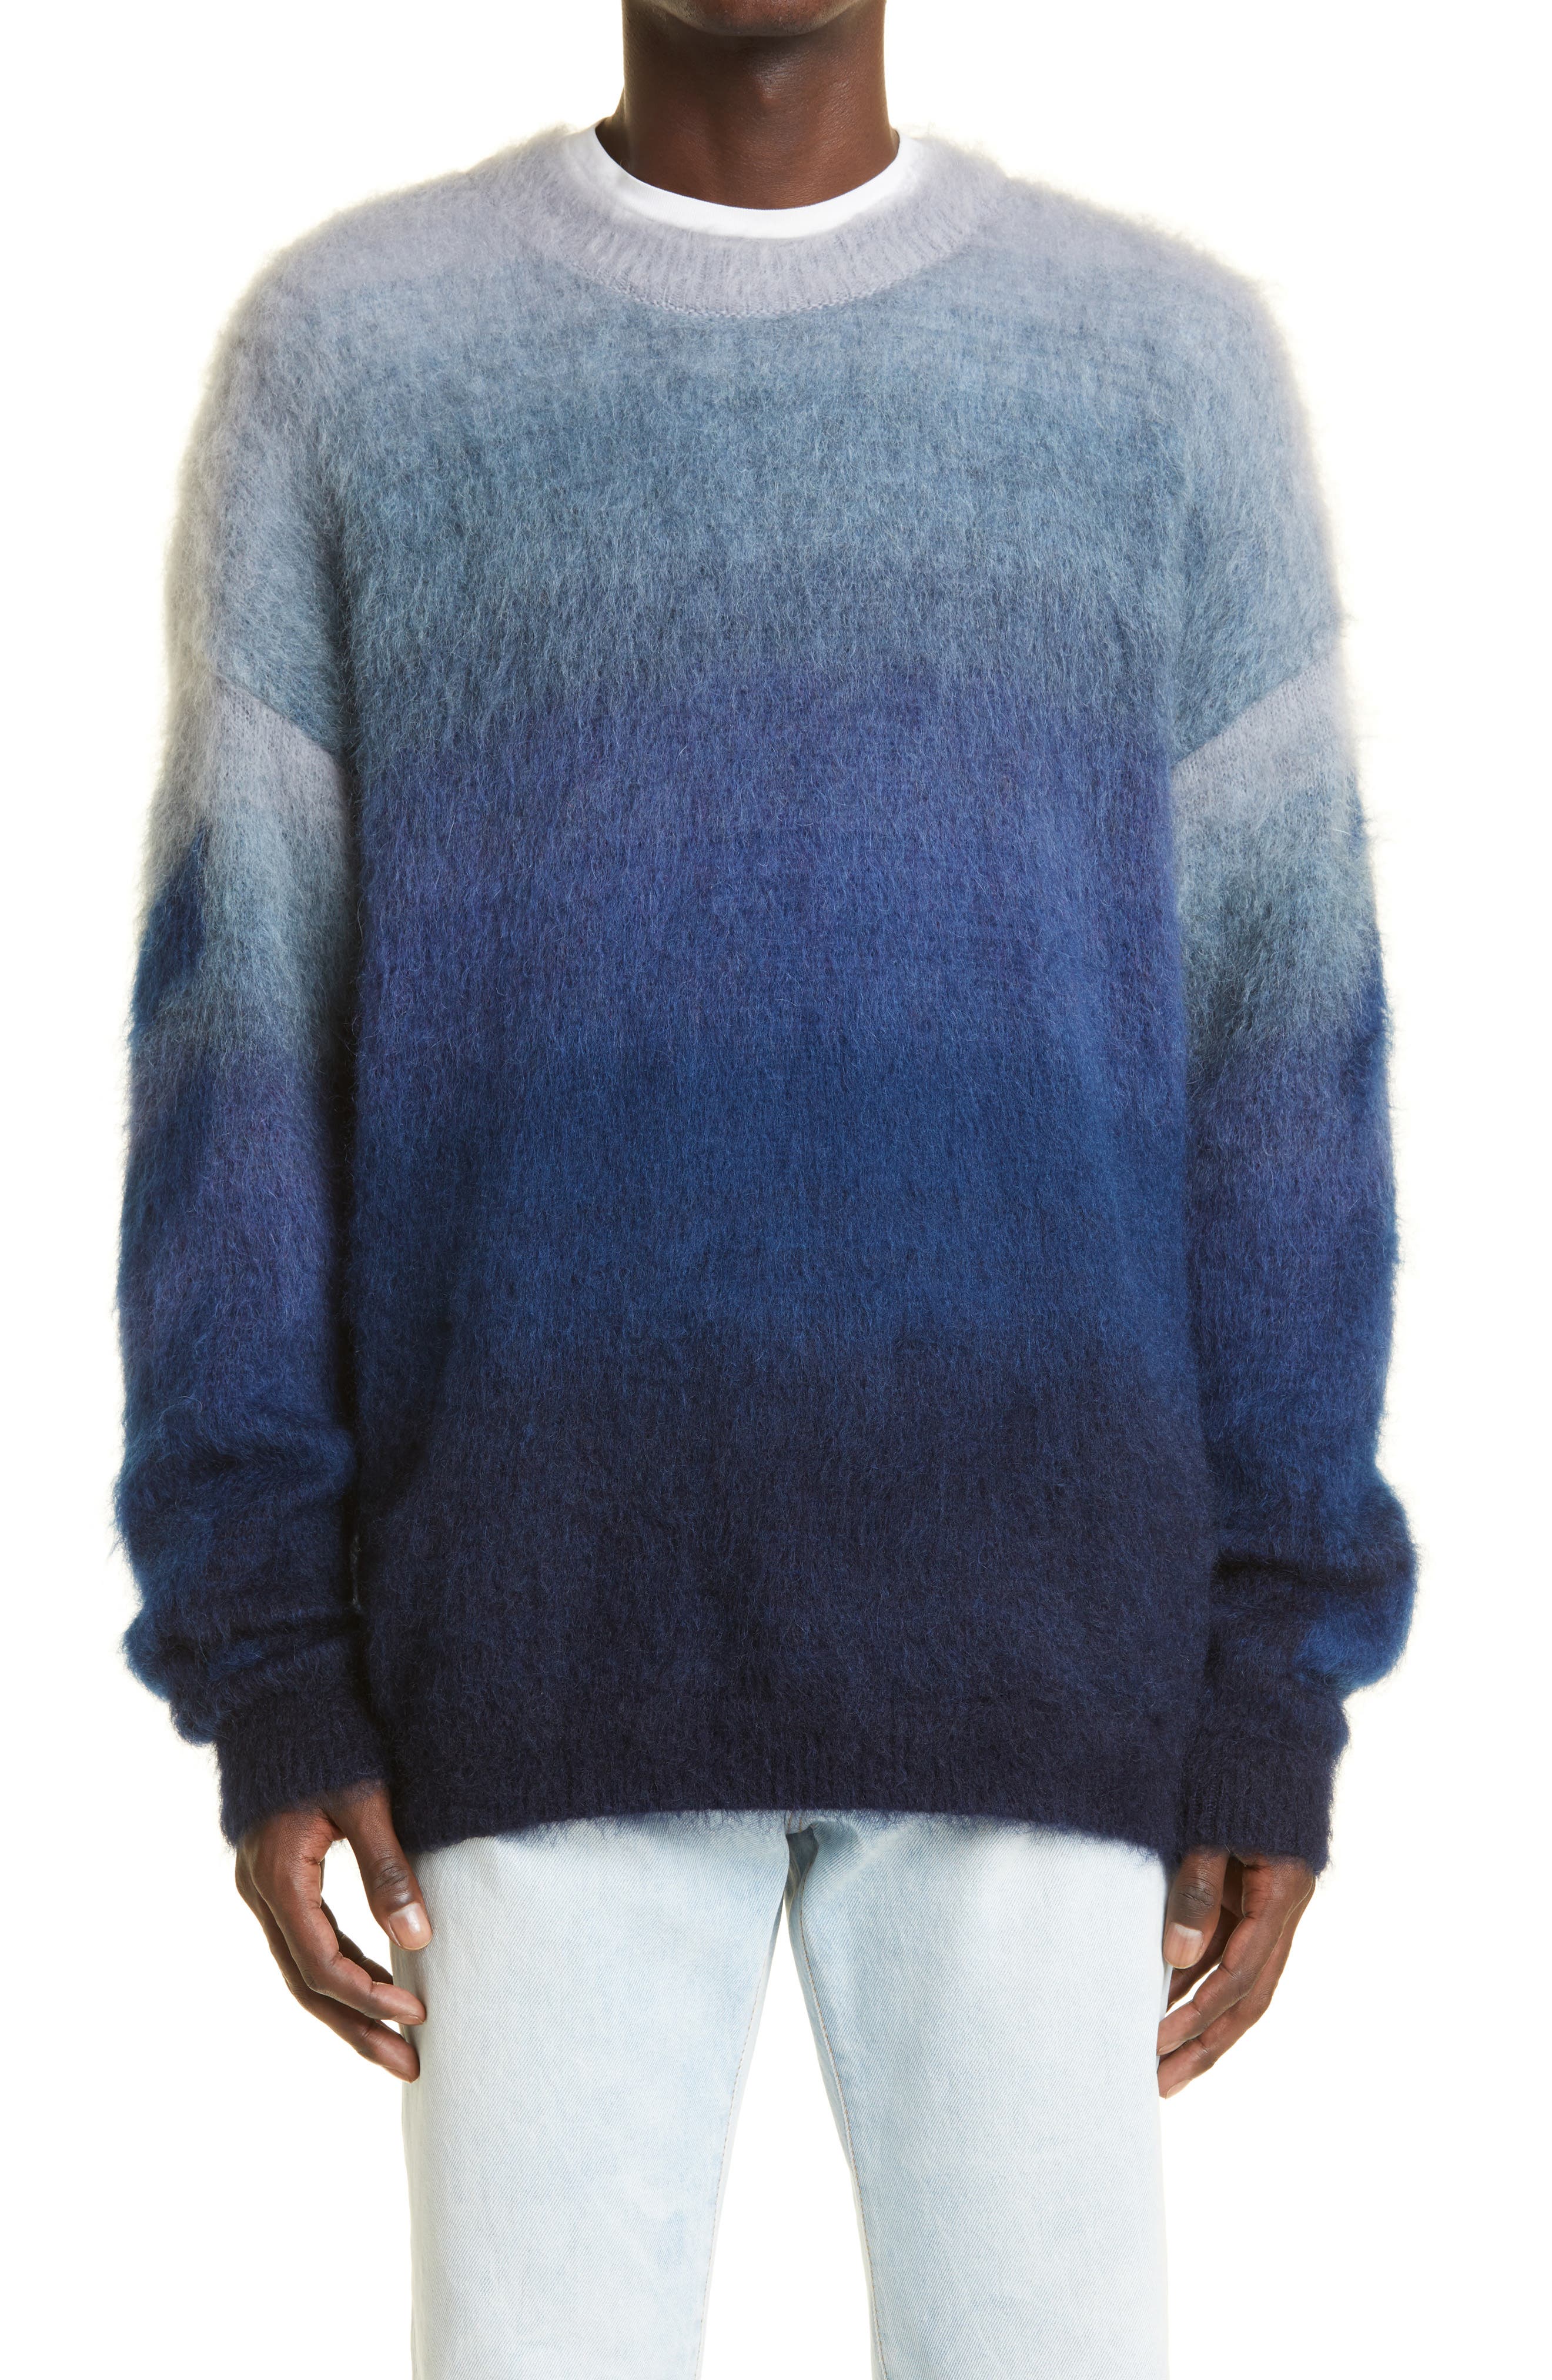 Off-White Men's Diagonal Stripe Brushed Mohair Blend Sweater in Blue Blue at Nordstrom, Size Medium